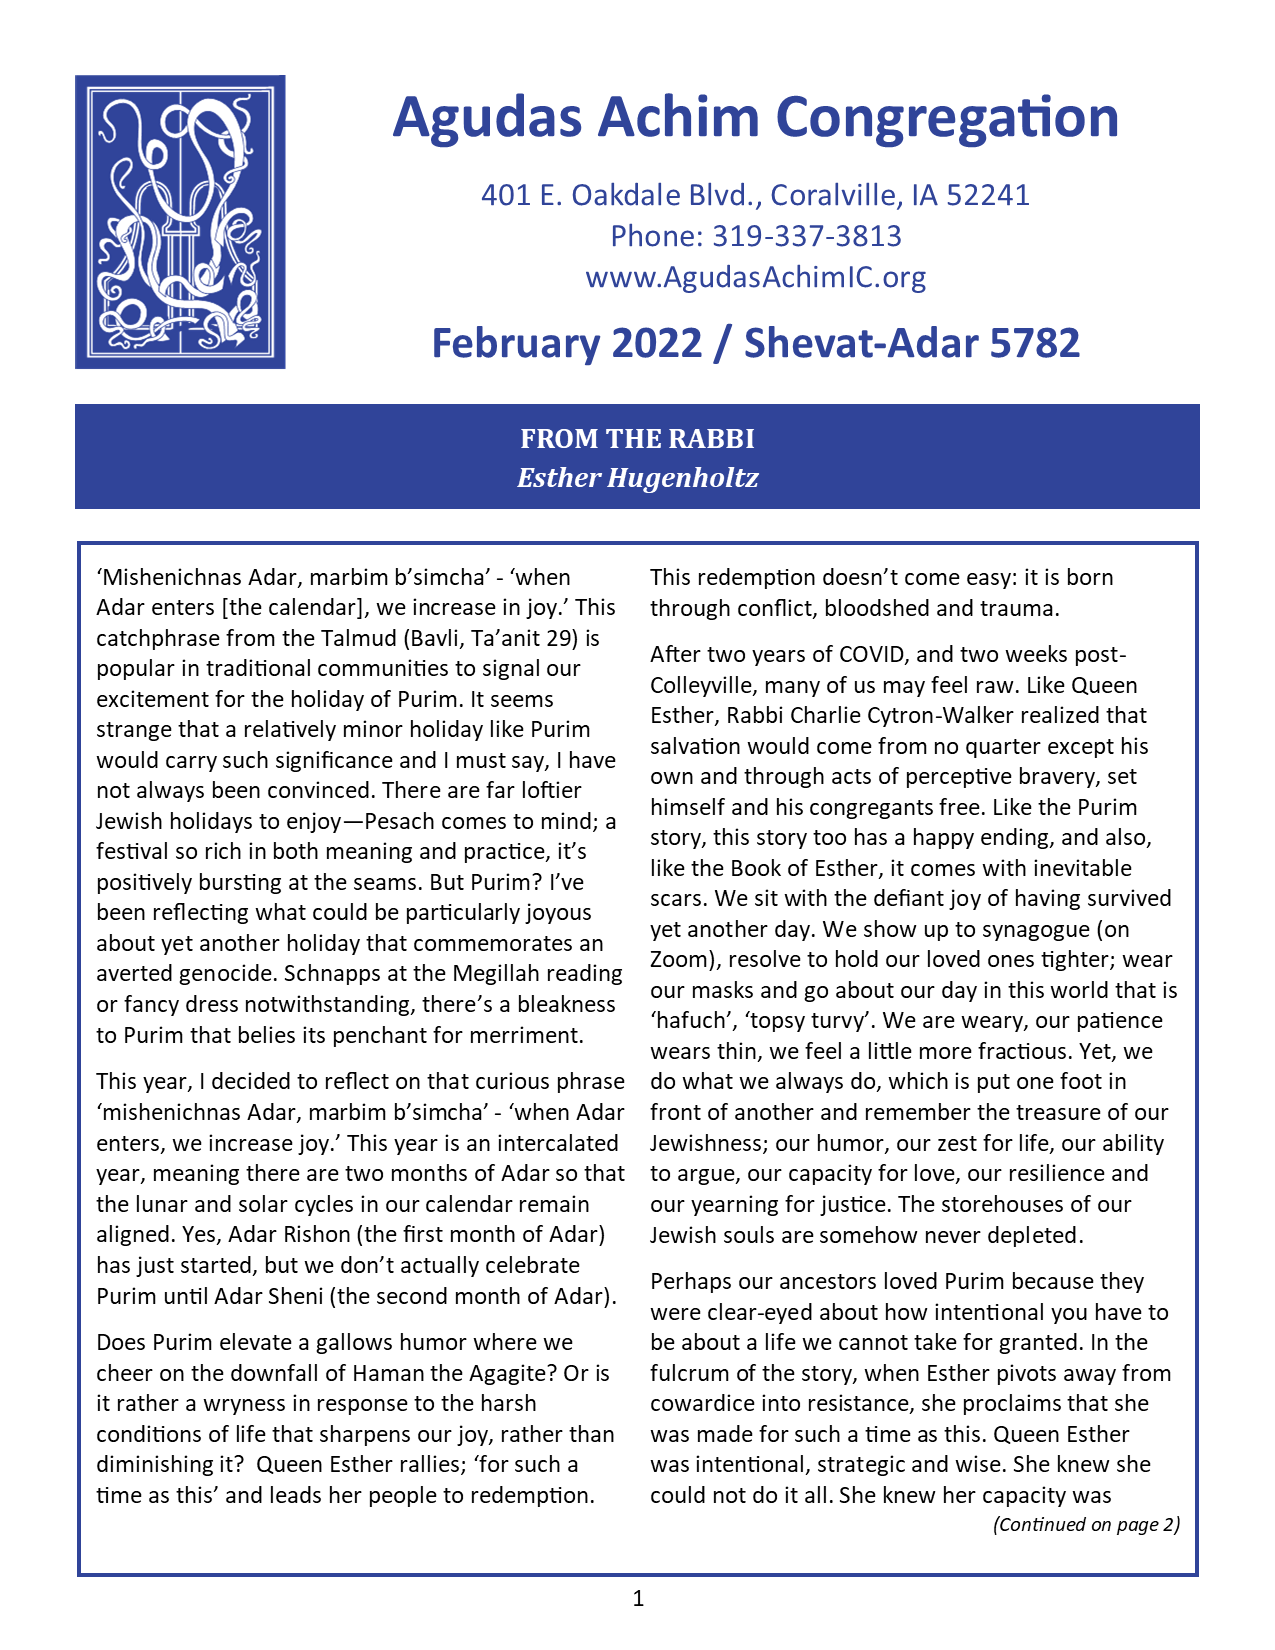 February 2022 Bulletin